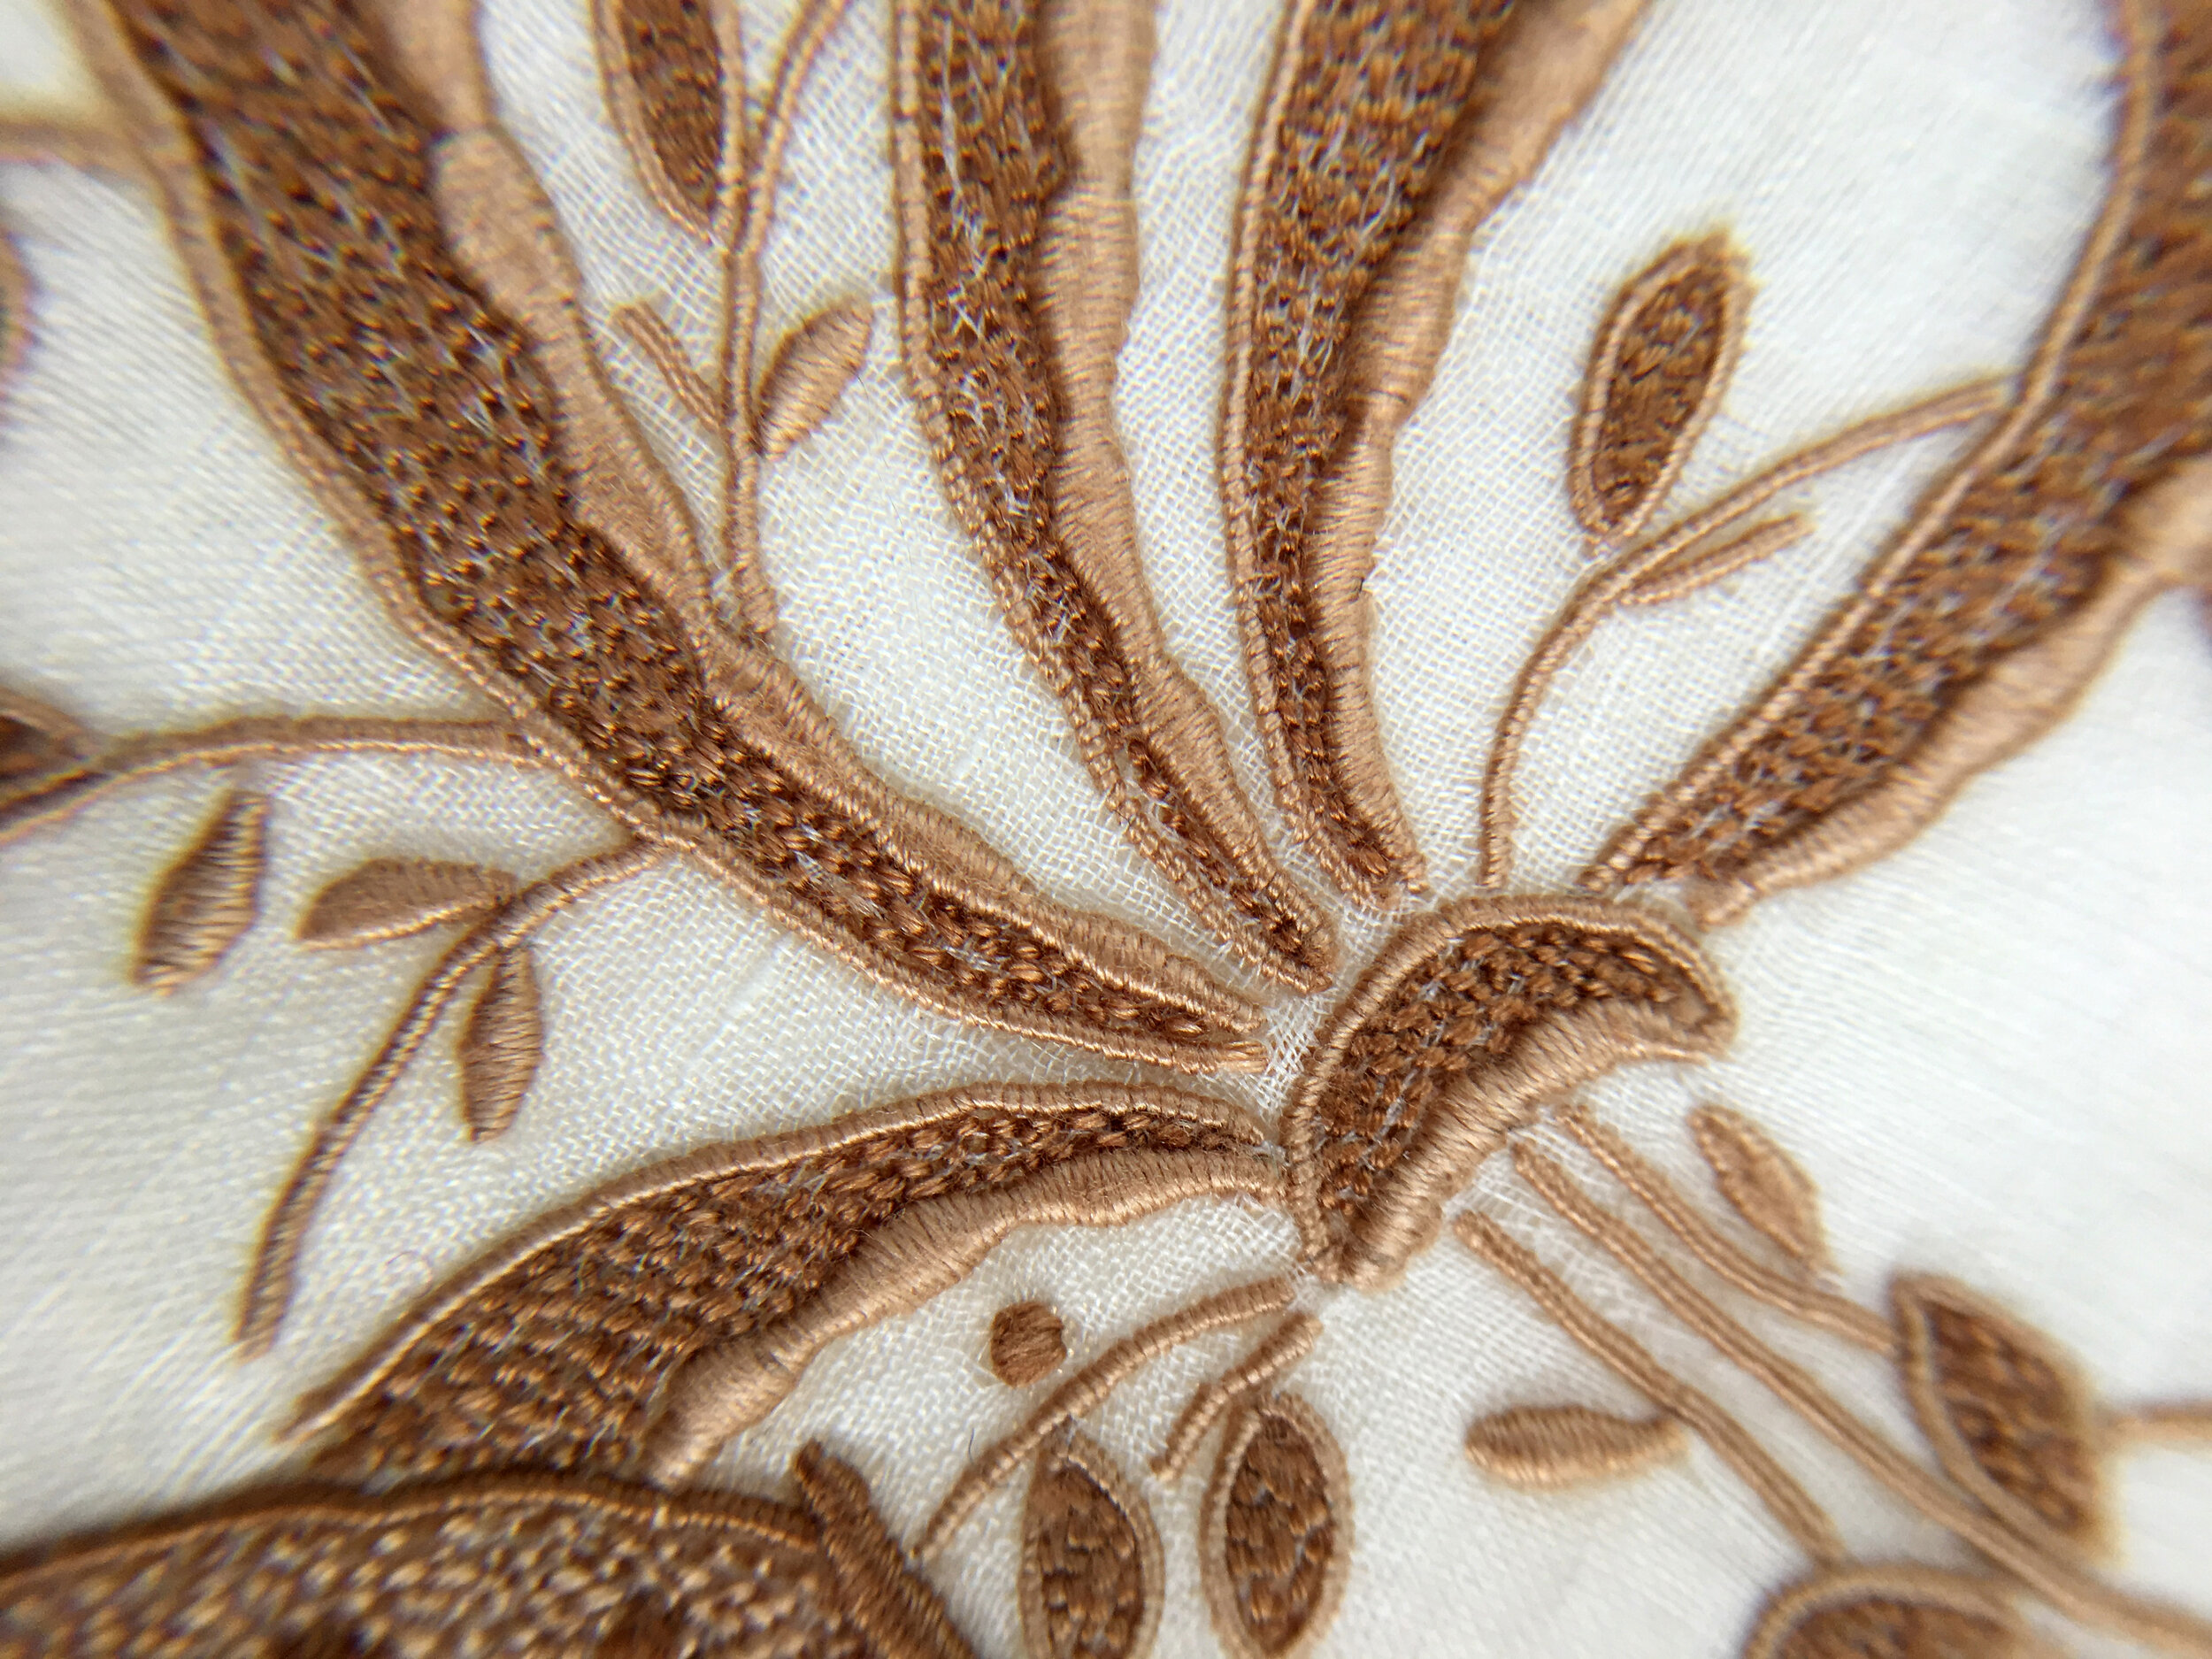 Vintage Tan Embroidery.jpg